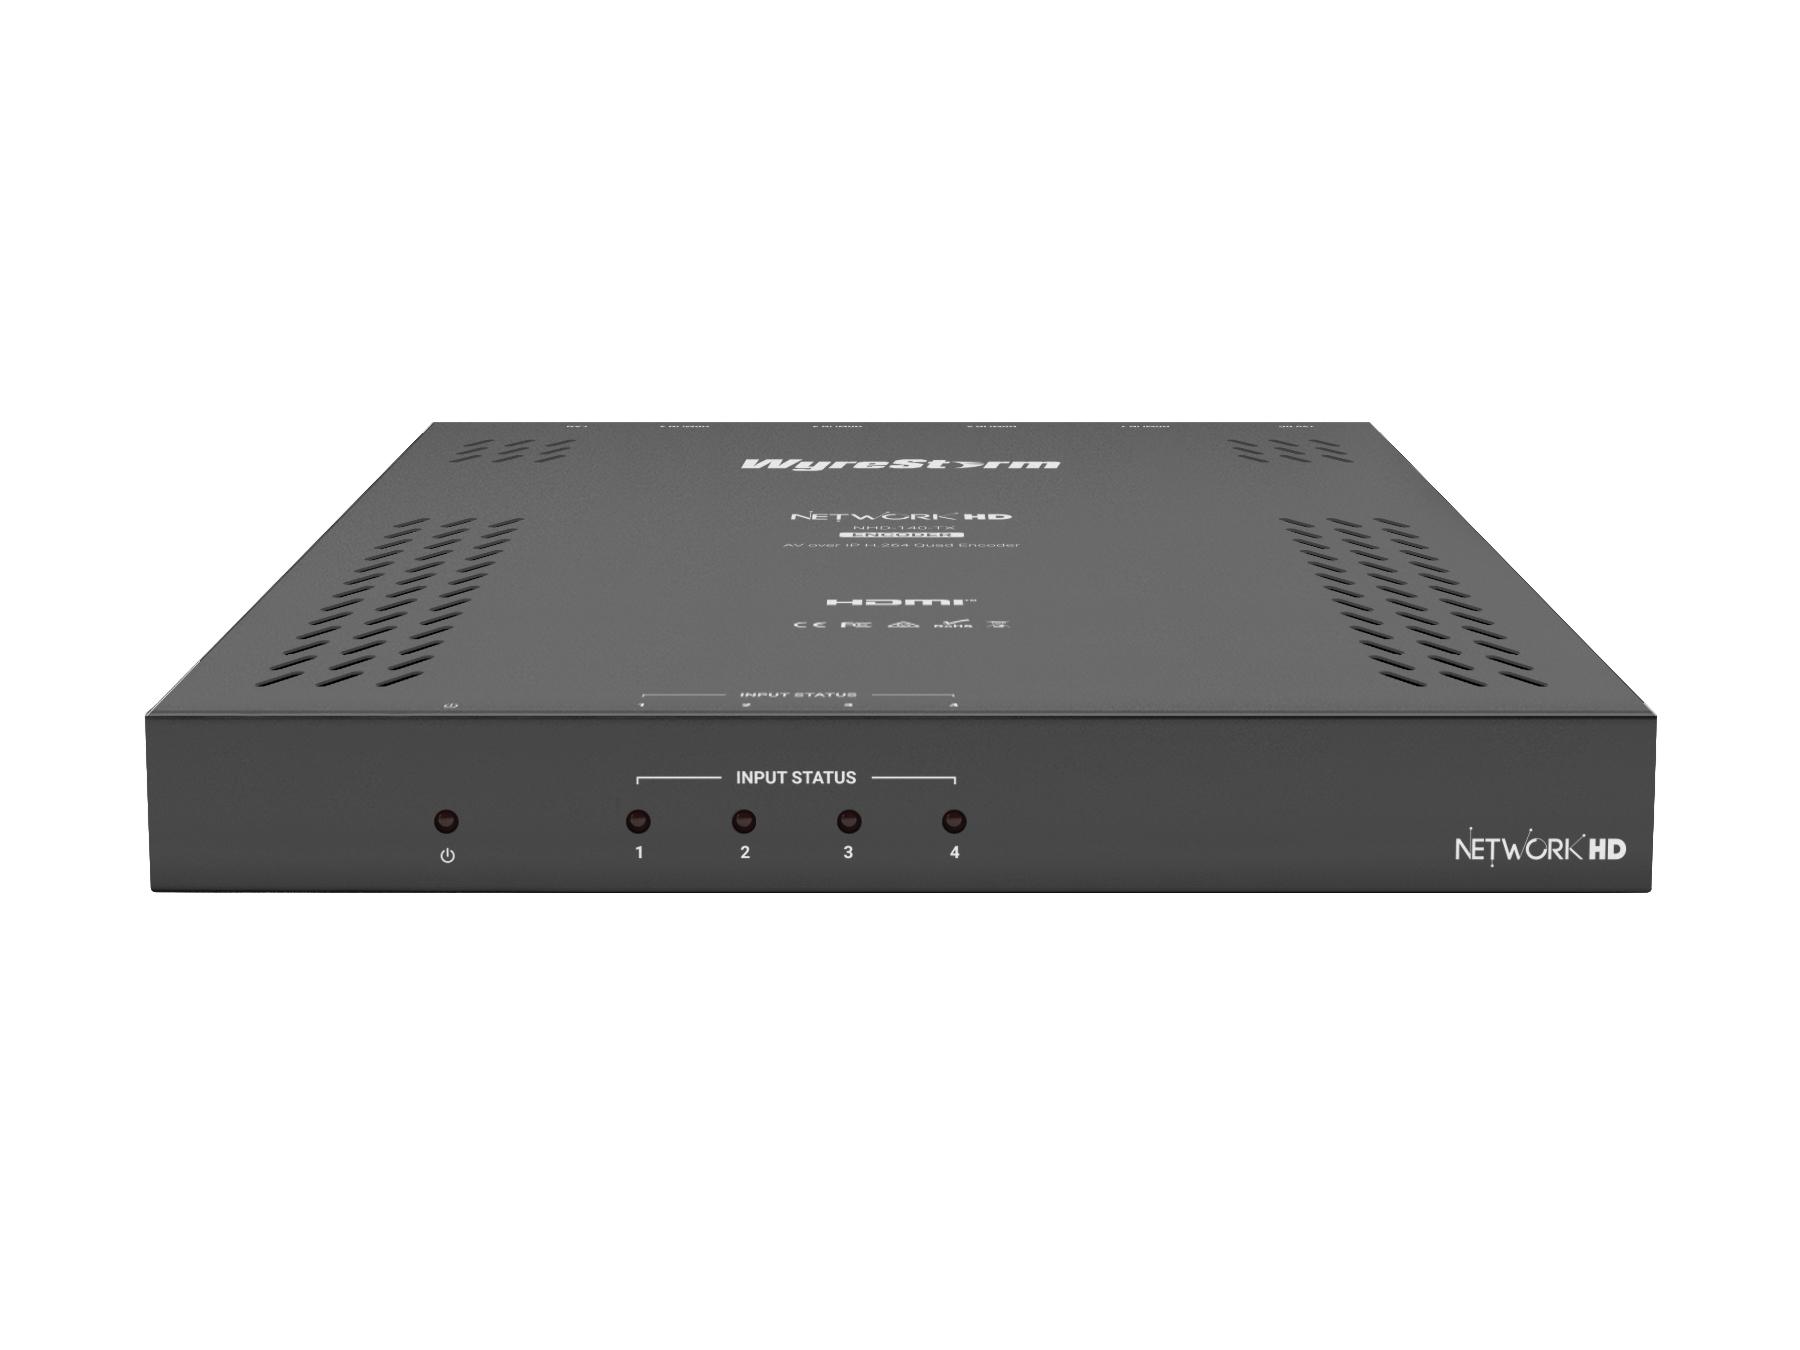 NetworkHD 400 series